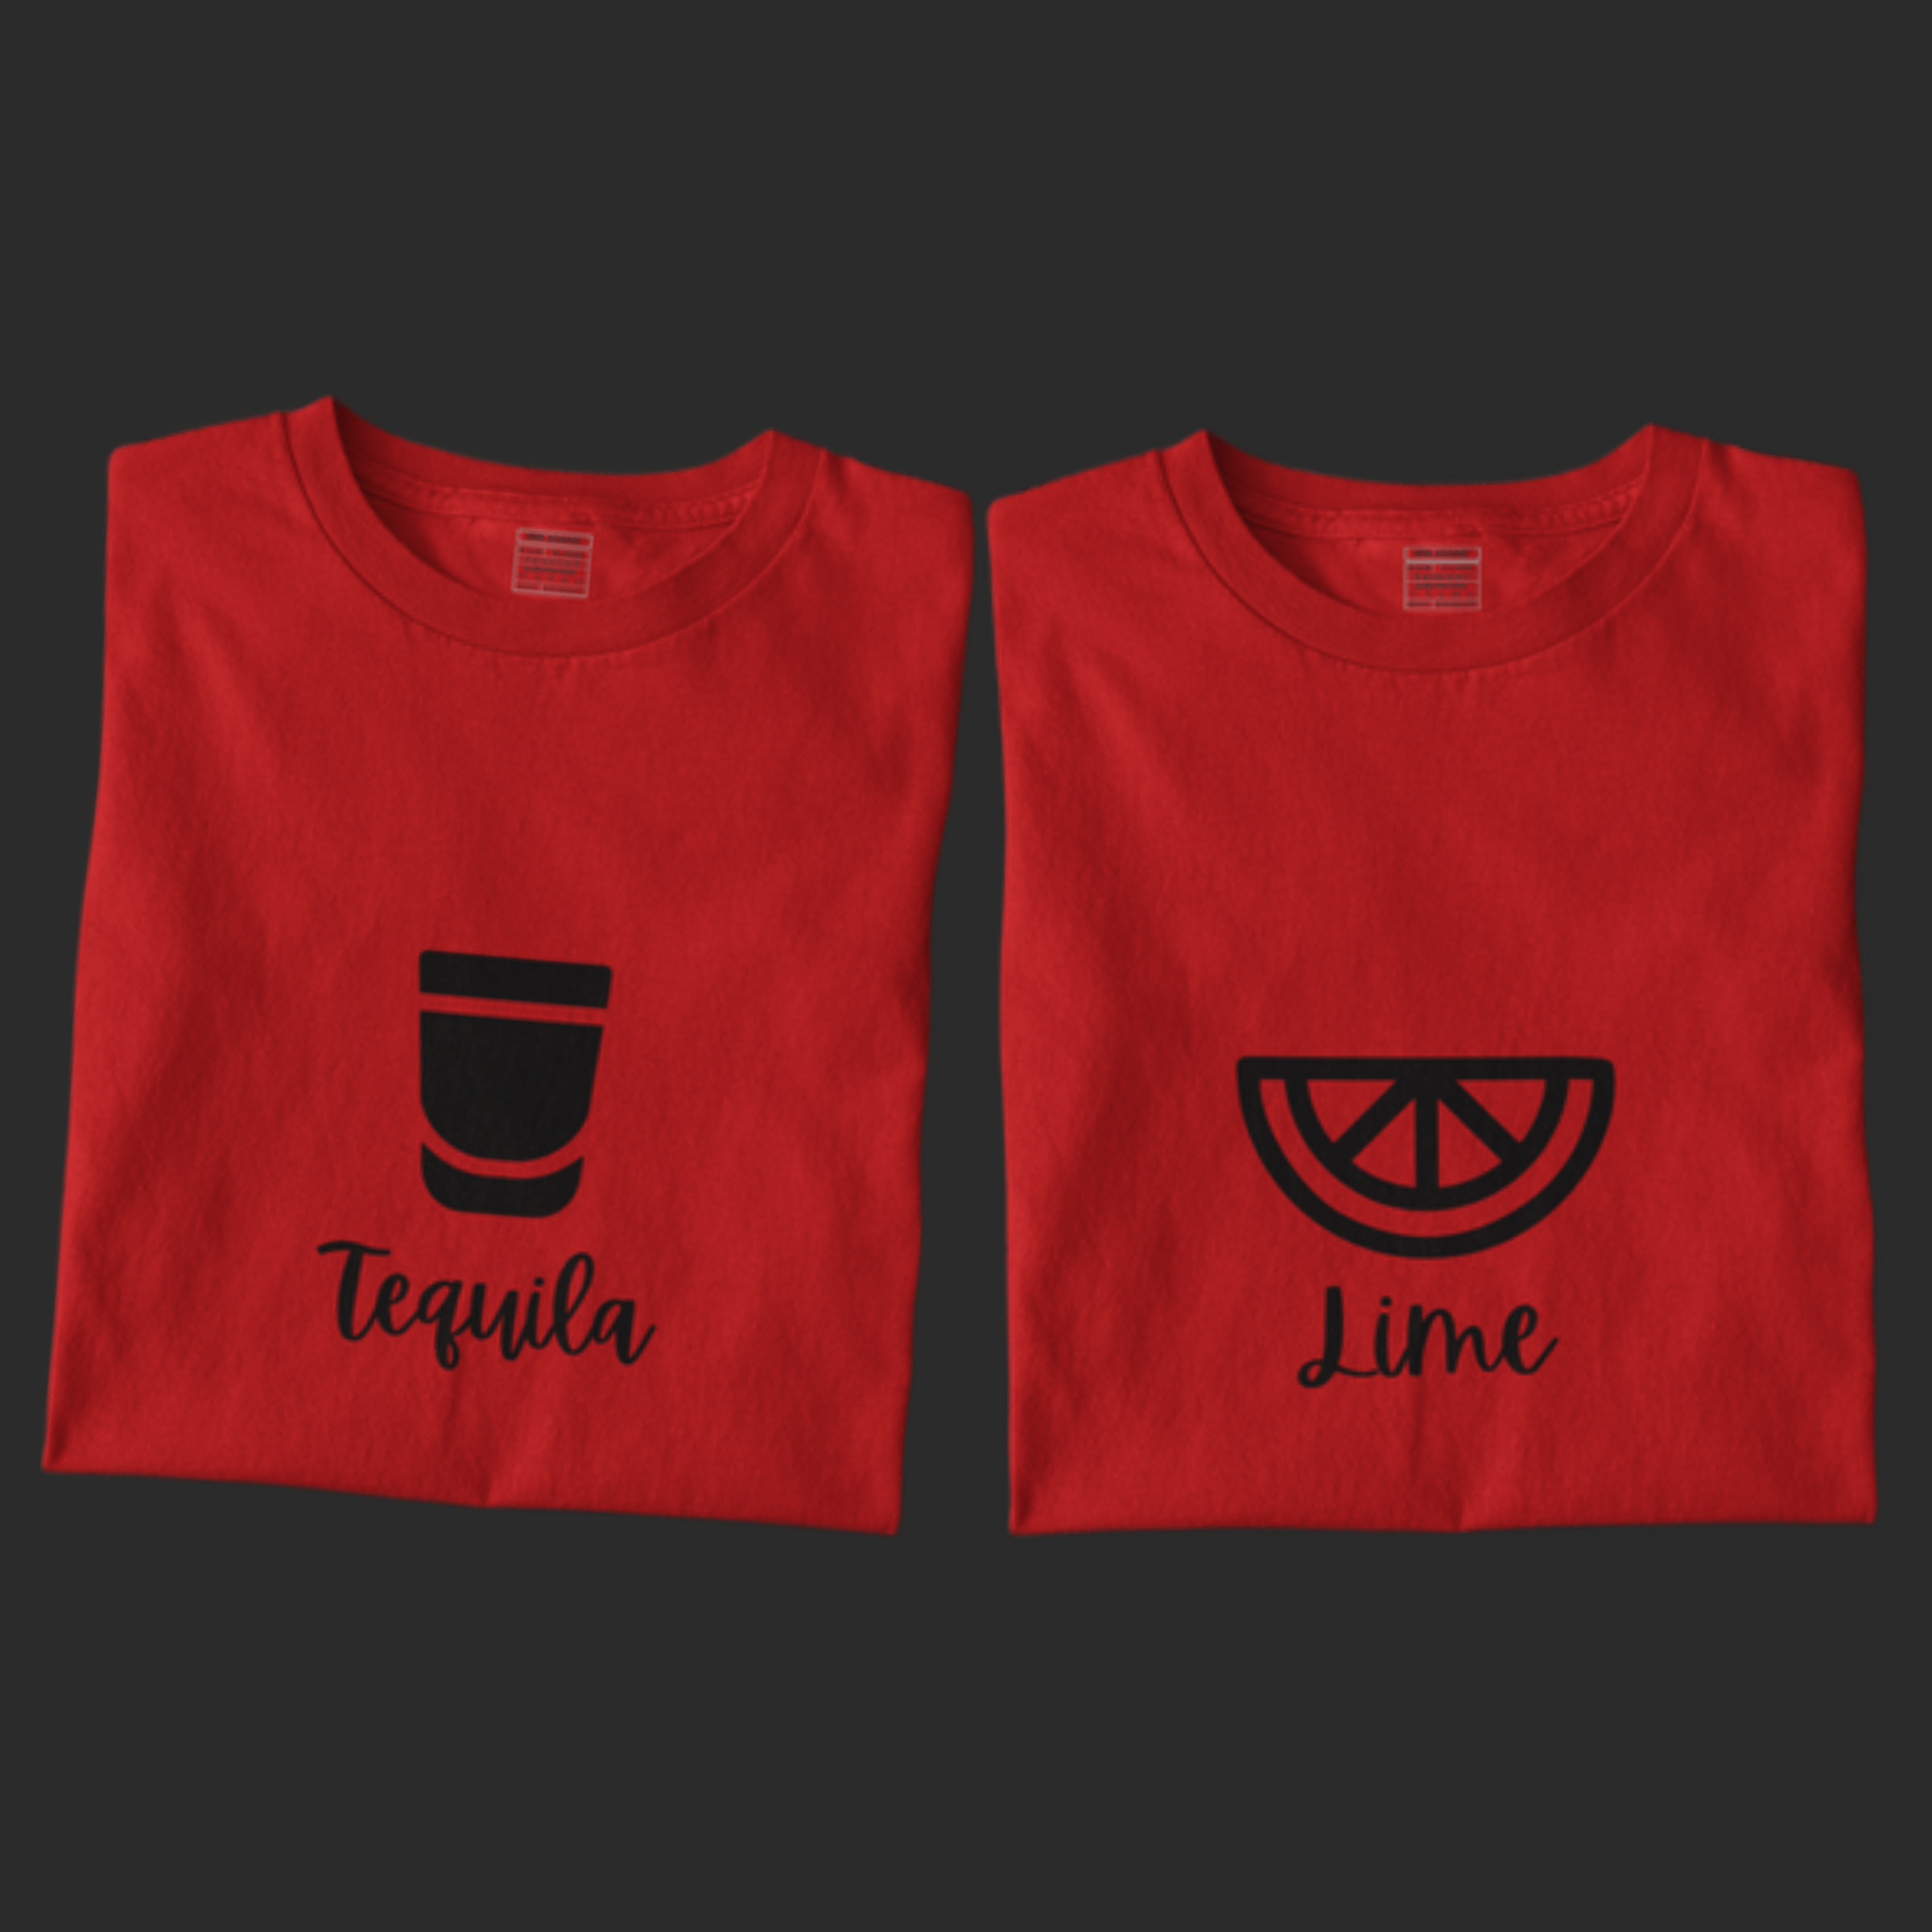 Tequila - Lime Couple's T-shirt - Ken Adams